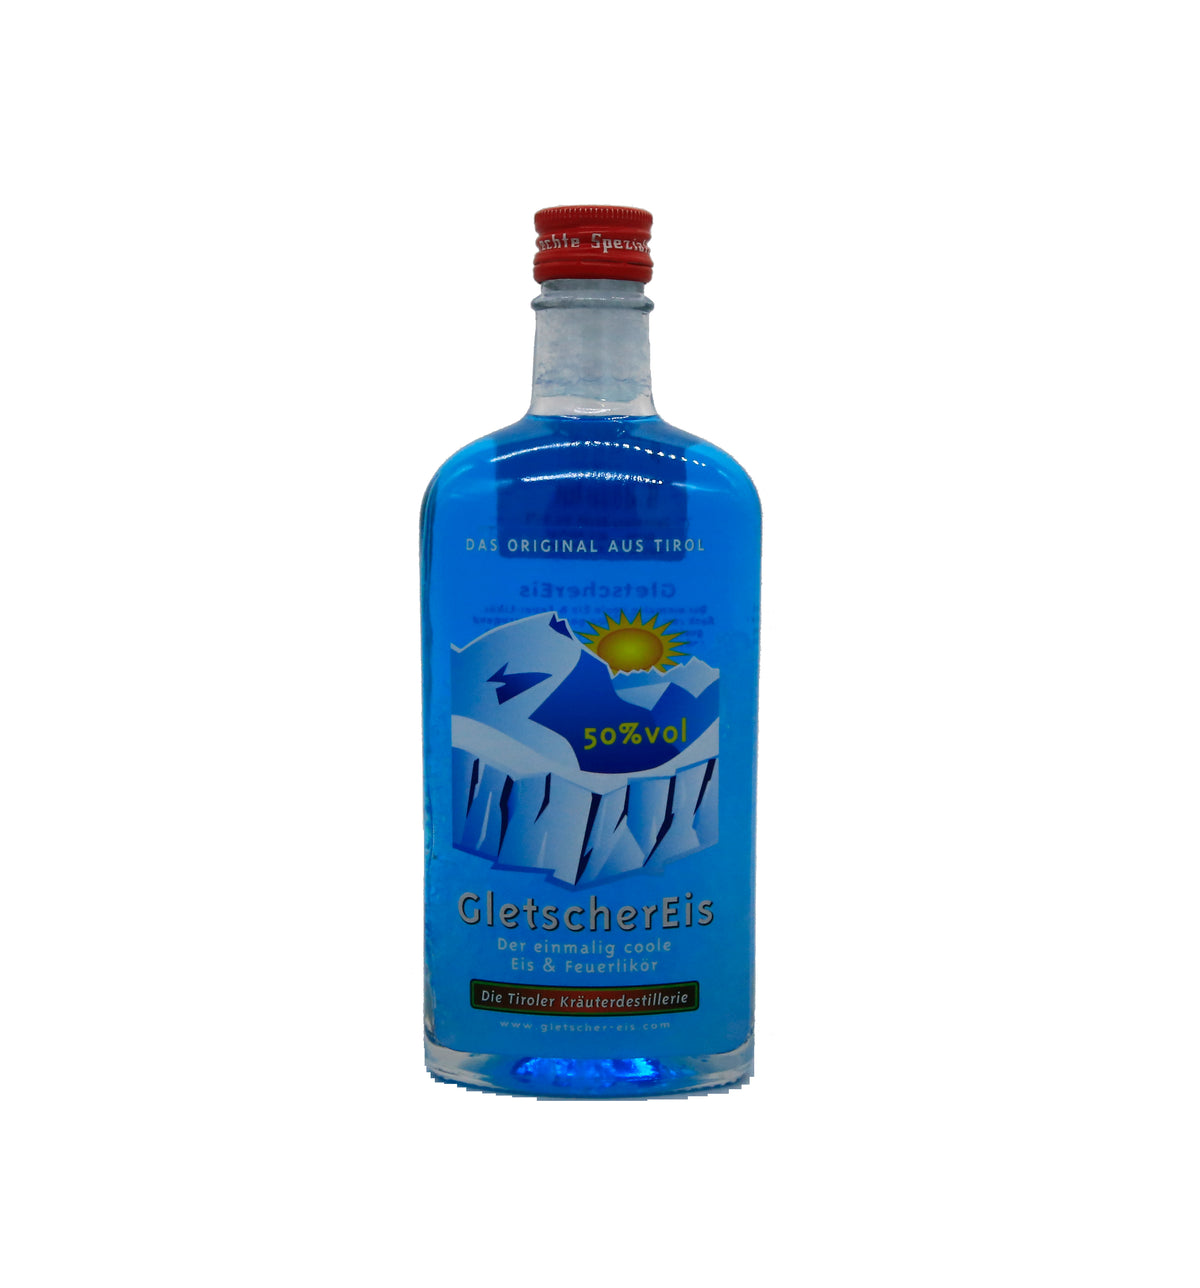 Baumann GletscherEis ( Glacier Ice Specialties 500ml — Germanliquor.com.au German | ) Liquor